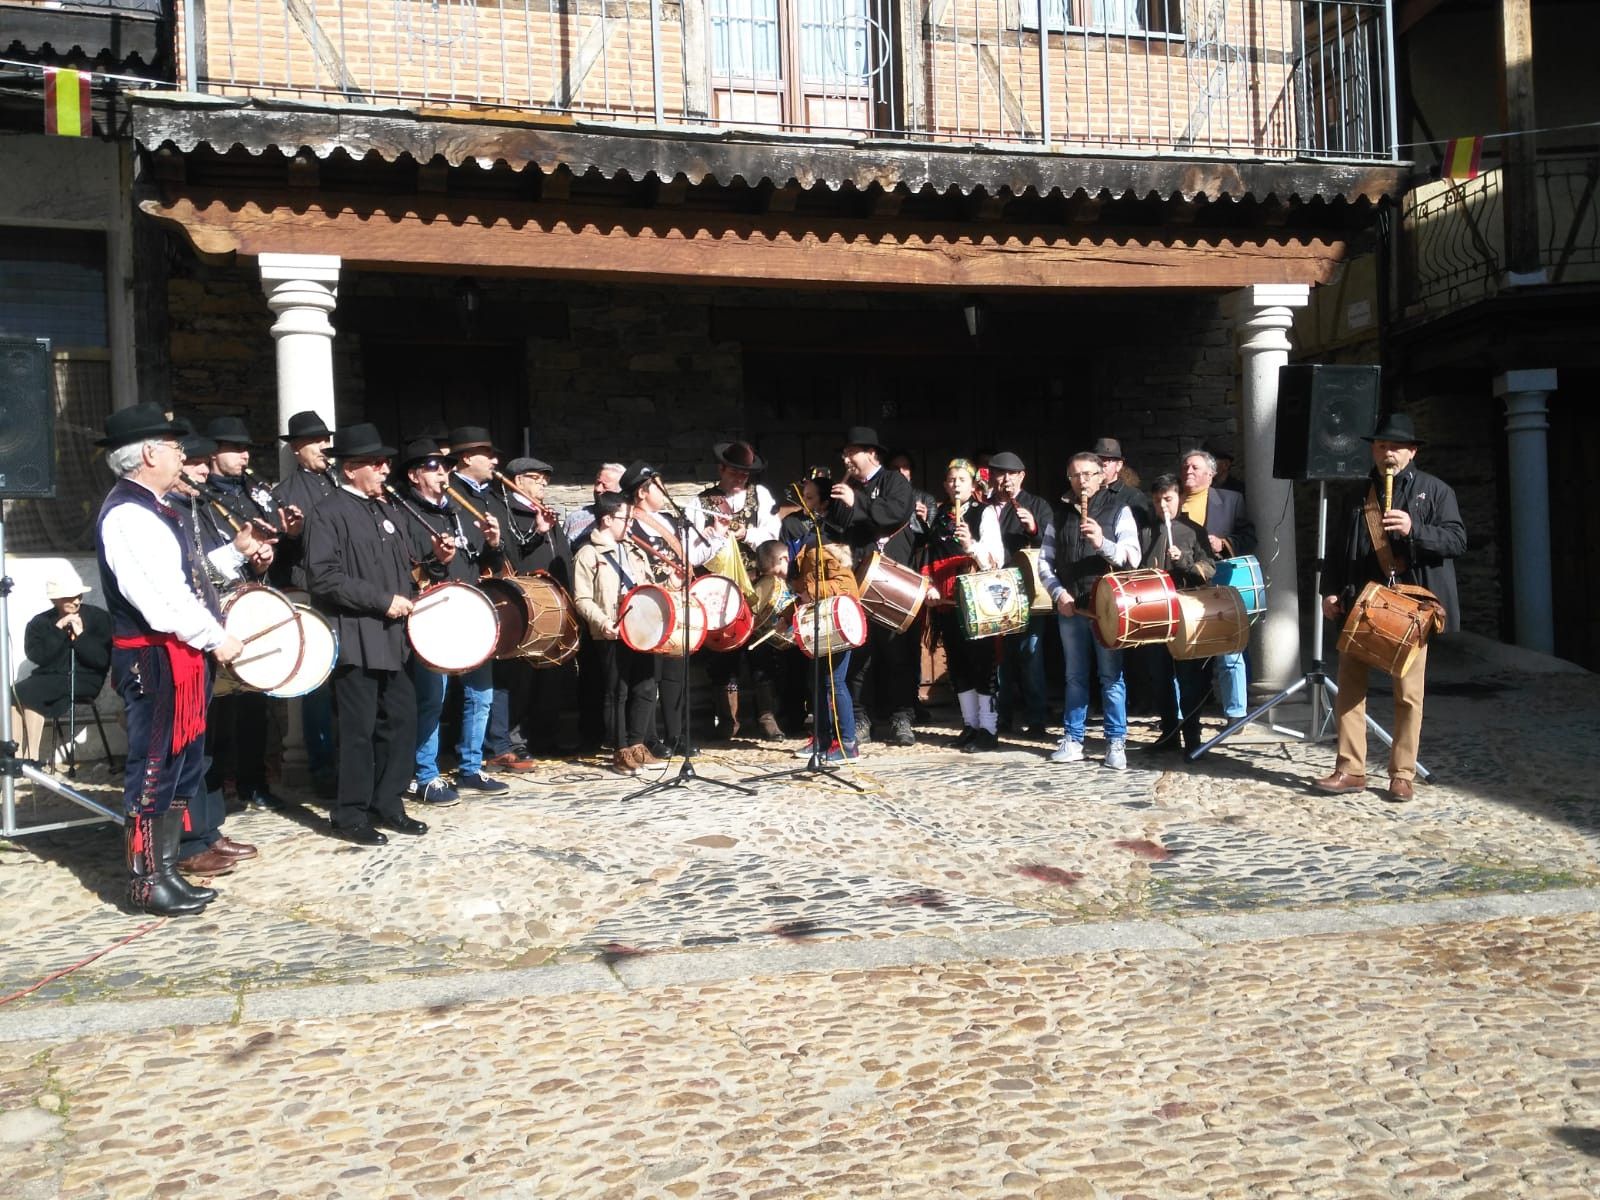  Festival de tamborileros en valero (3) 